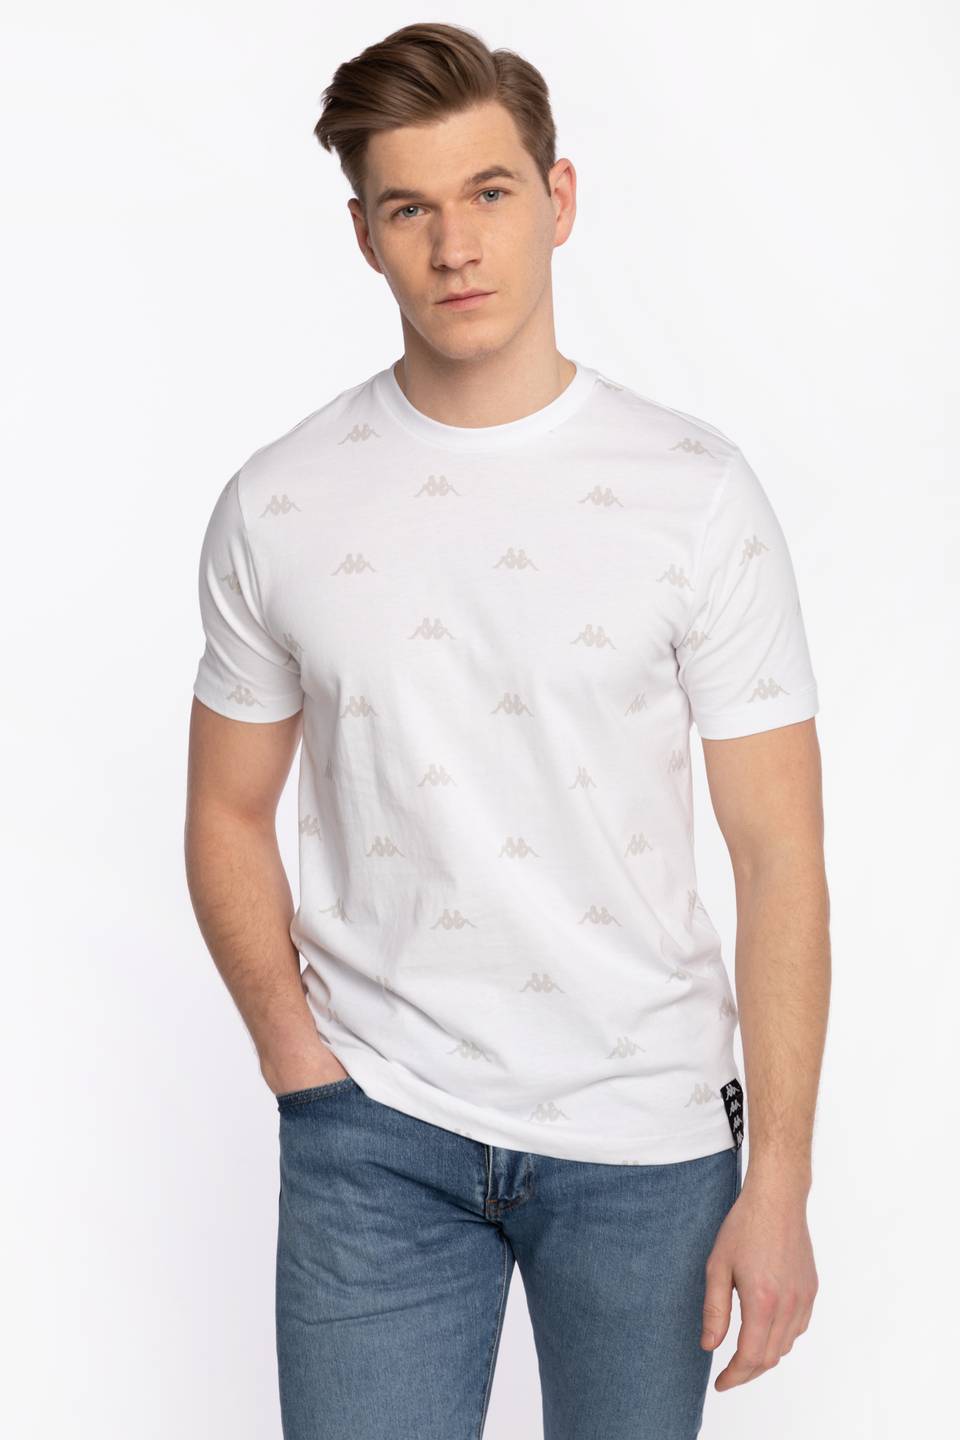 Koszulka Kappa Z KRÓTKIM RĘKAWEM IZDOT T-Shirt, Regular Fit 309037 11-0601